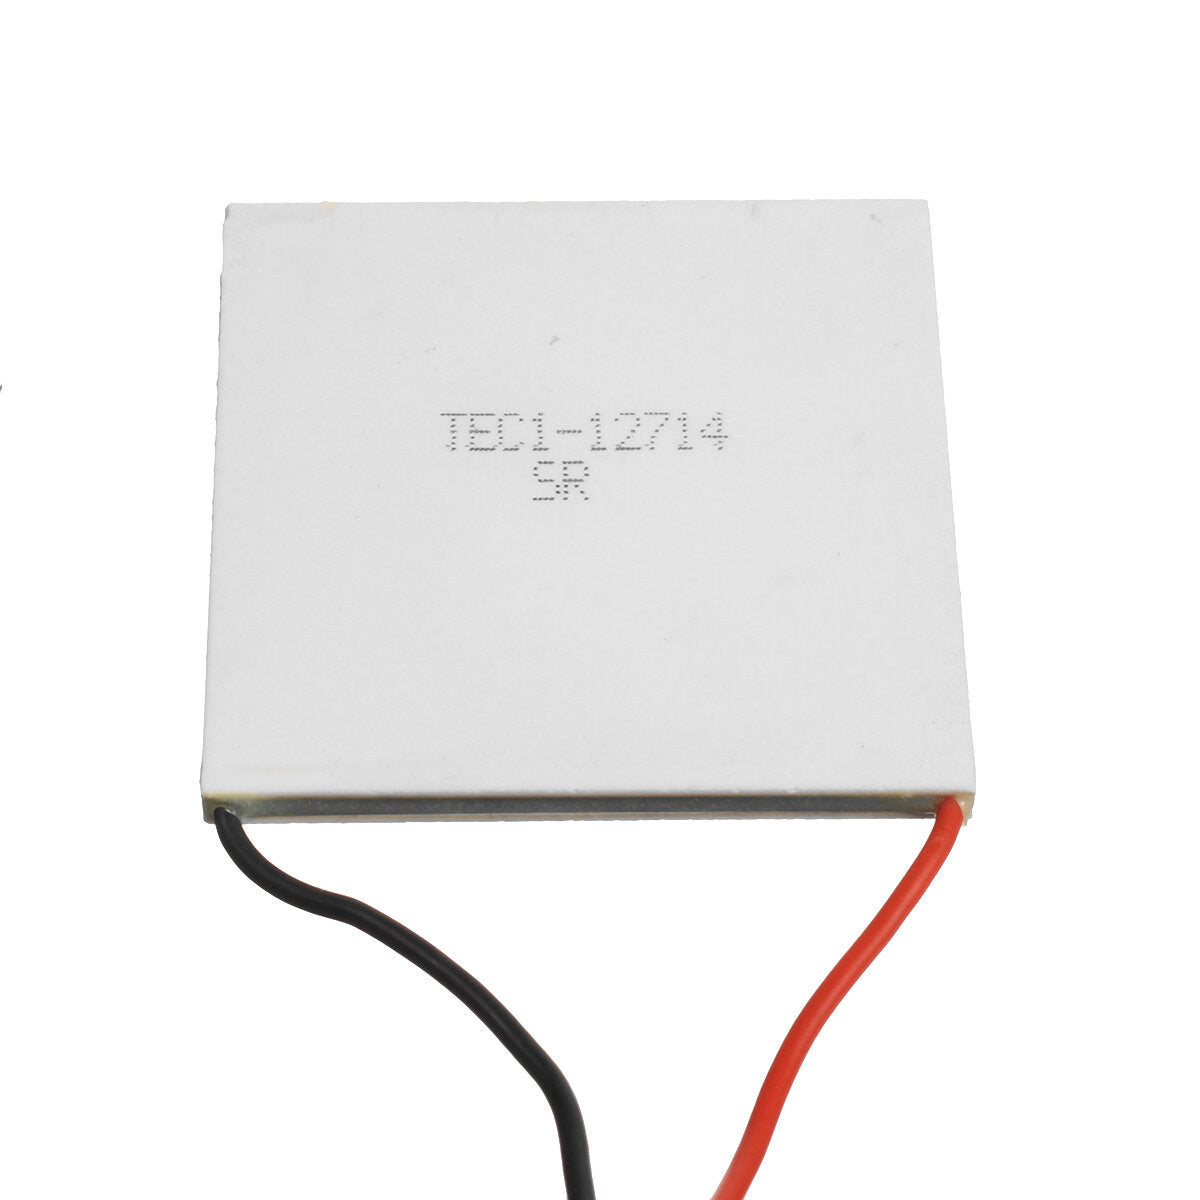 tec1-12714 12v heatsink tec semiconductor thermo-elektrische koeler 50mm*50mm*3.6mm